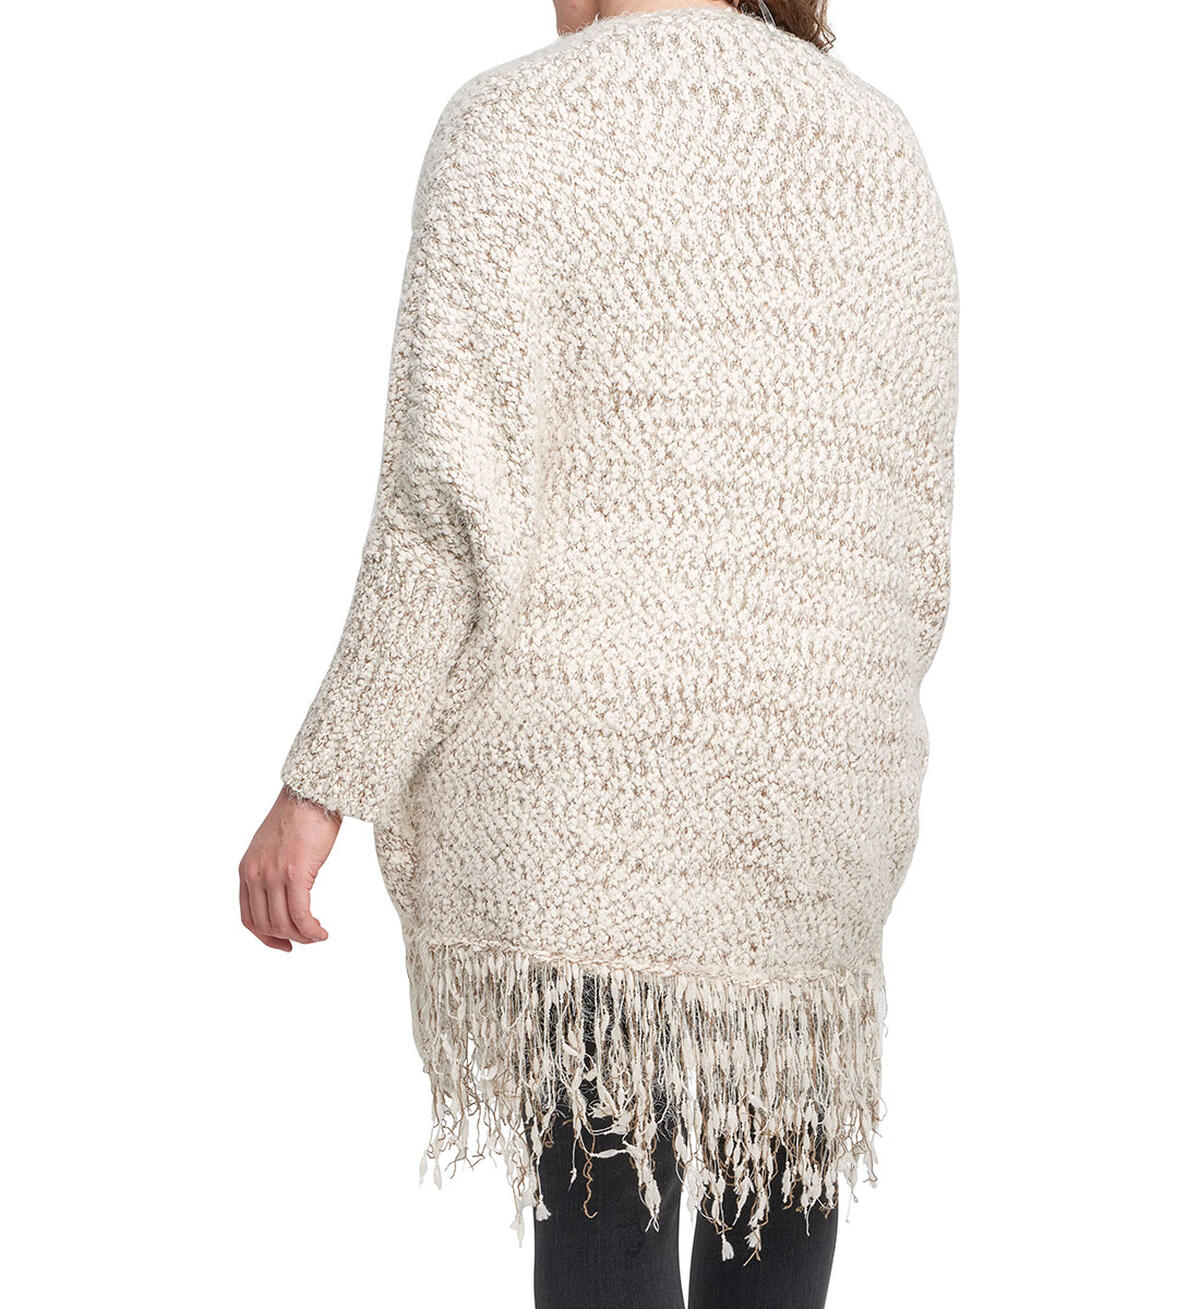 Marla Fringe Cardigan Sweater, , hi-res image number 1